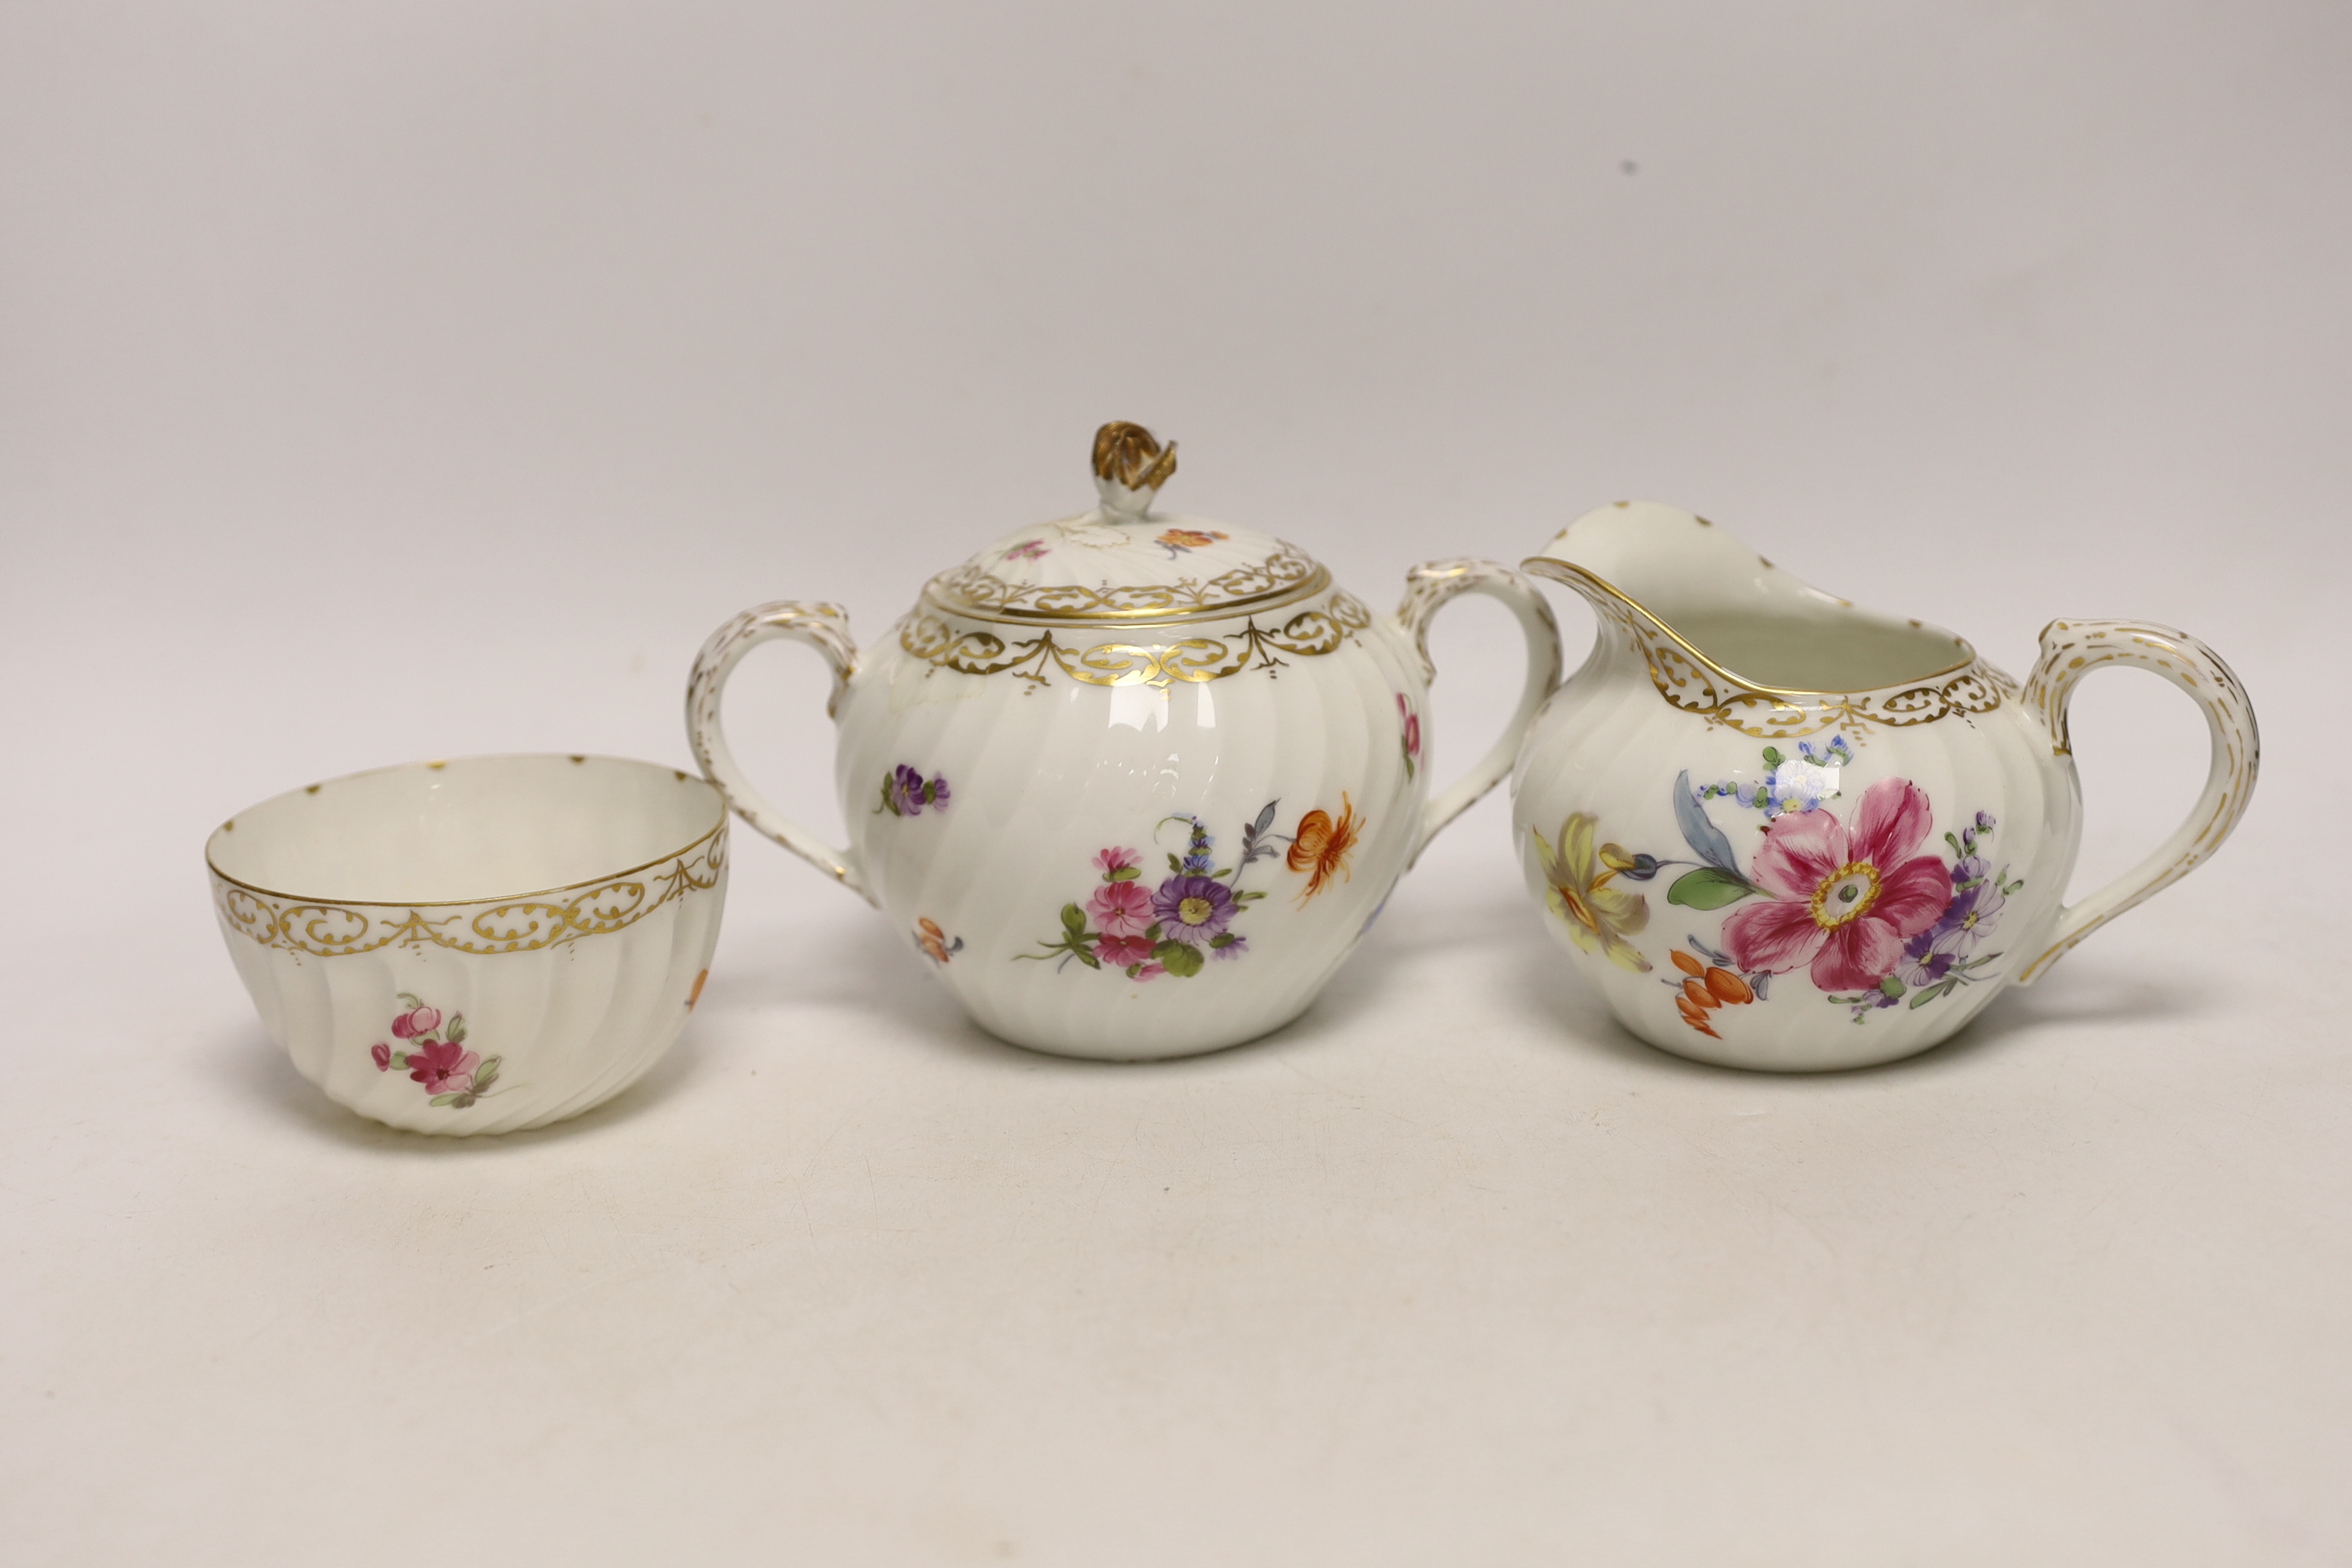 A Nymphenburg floral decorated teapot, milk jug and sugar bowl, teapot 13c high